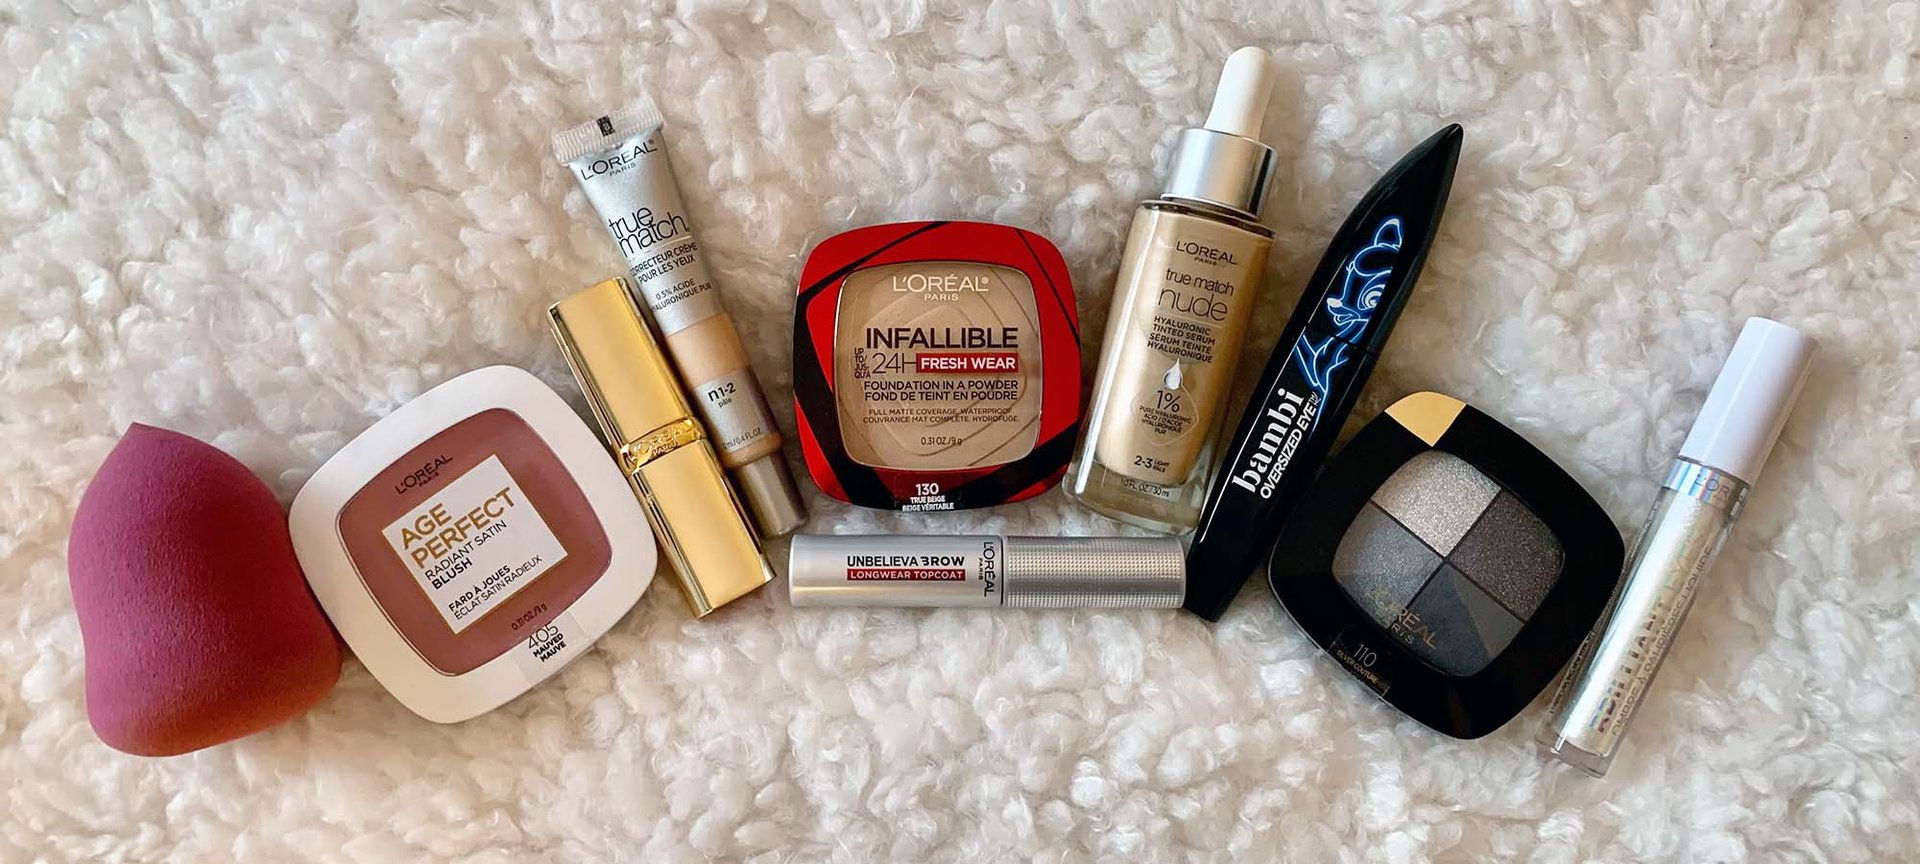 Zaailing rand Schrijf een brief 10 Essentials For A Beginner Makeup Kit - L'Oréal Paris